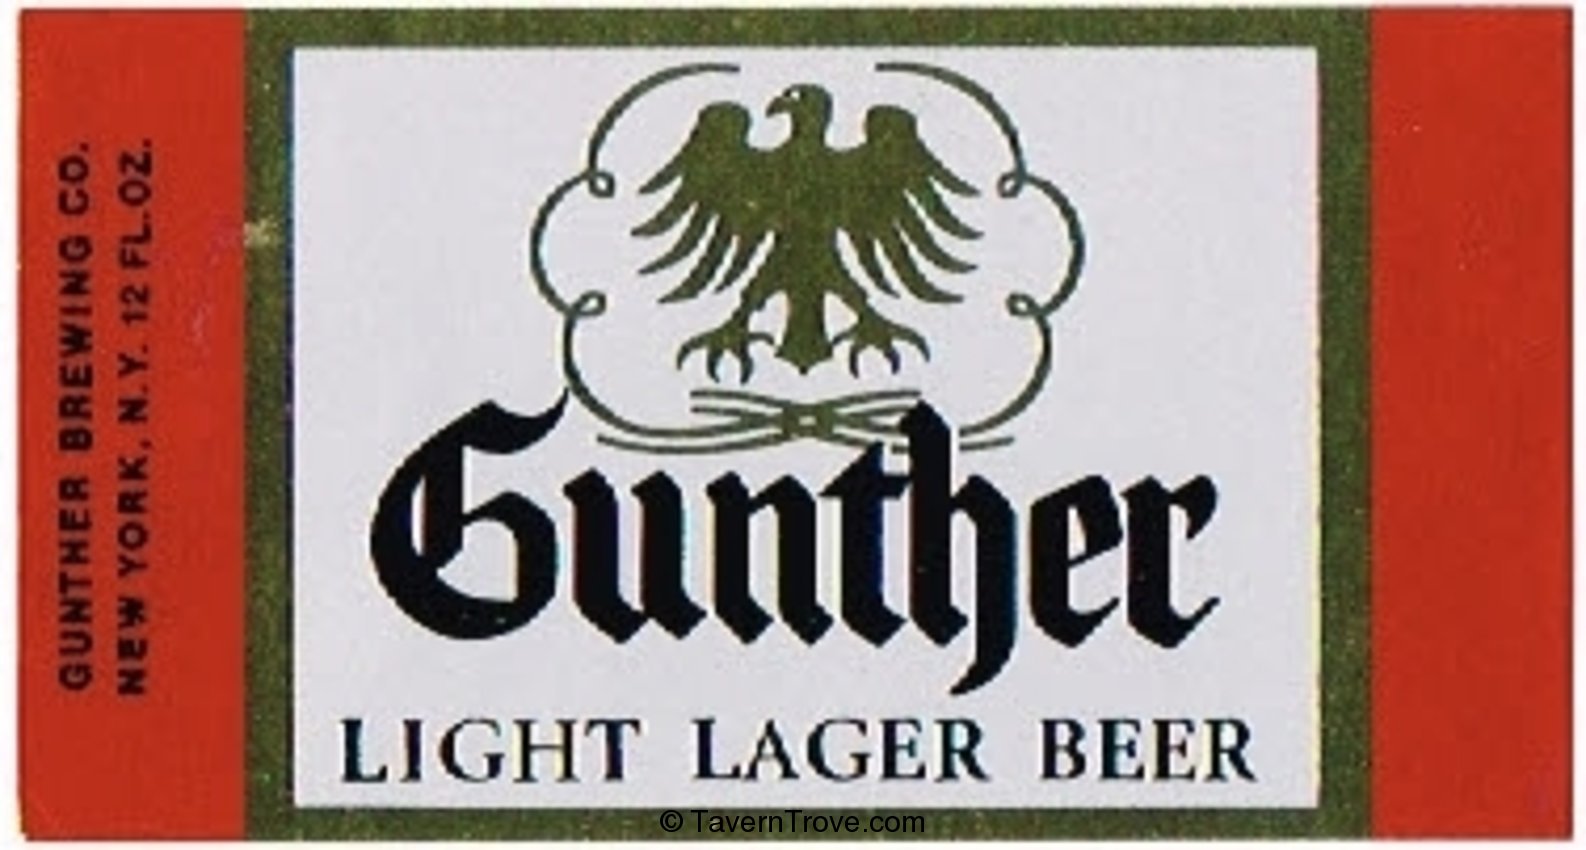 Gunther Light Lager Beer